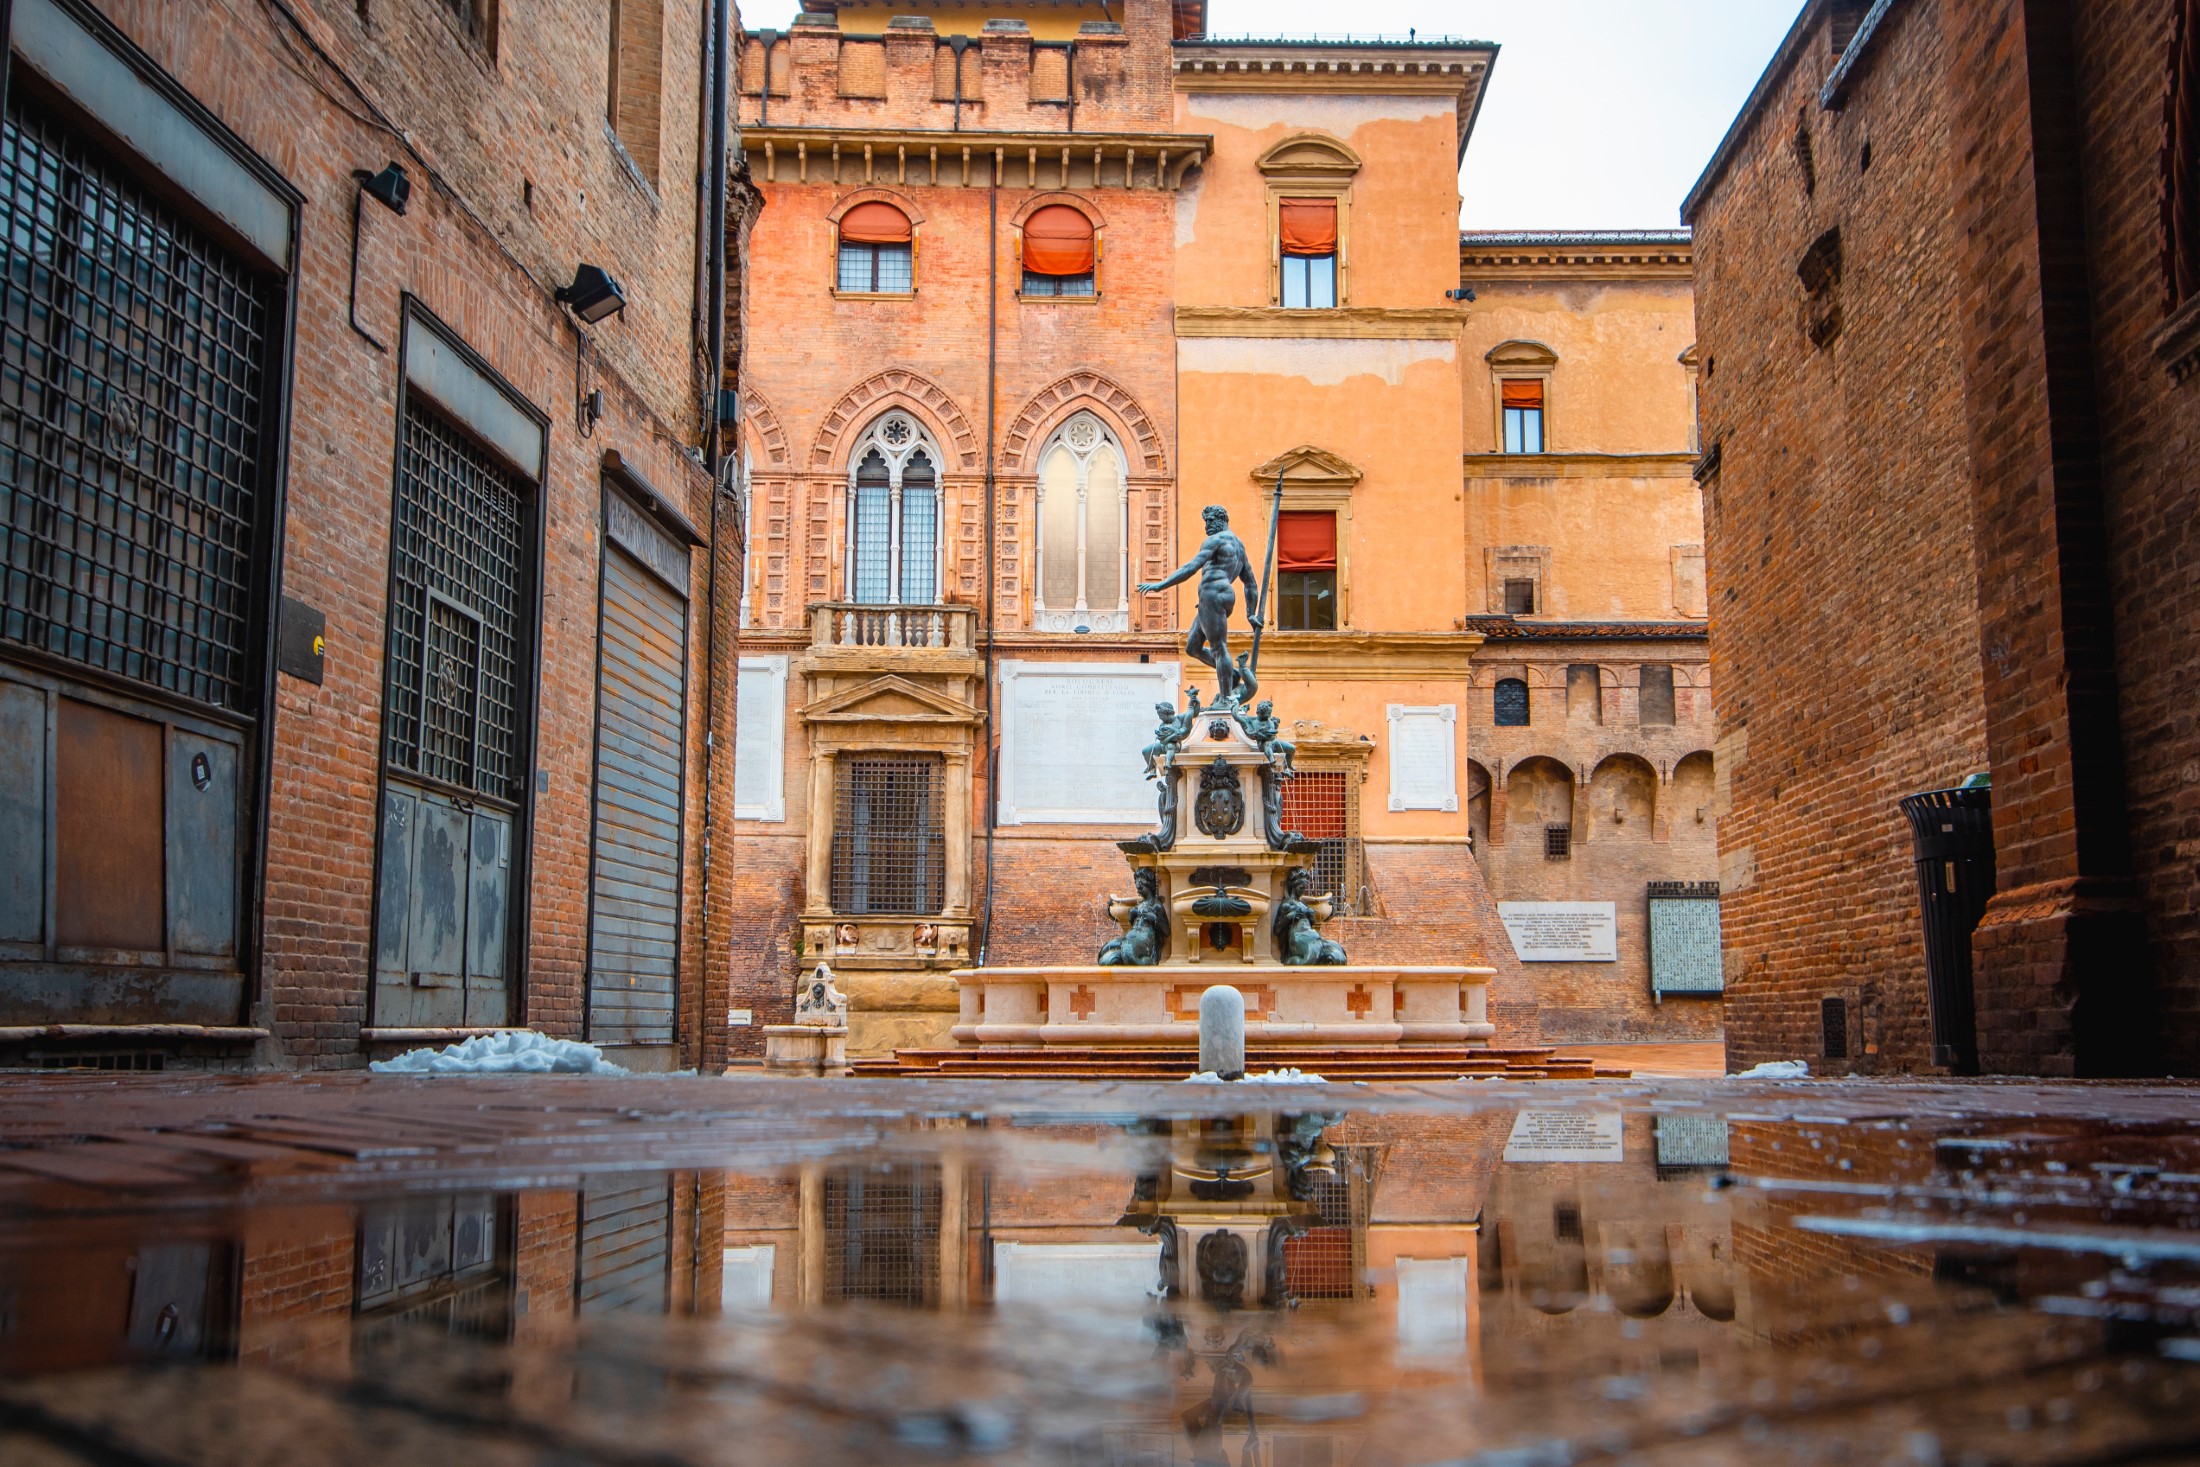 Zwiedzanie Bolonii podczas brzydkiej pogody: Atrakcje na każdą pogodę!Bologna in the morning, looking Neptune statue in main square with sunlight and reflection in a puddle on the street